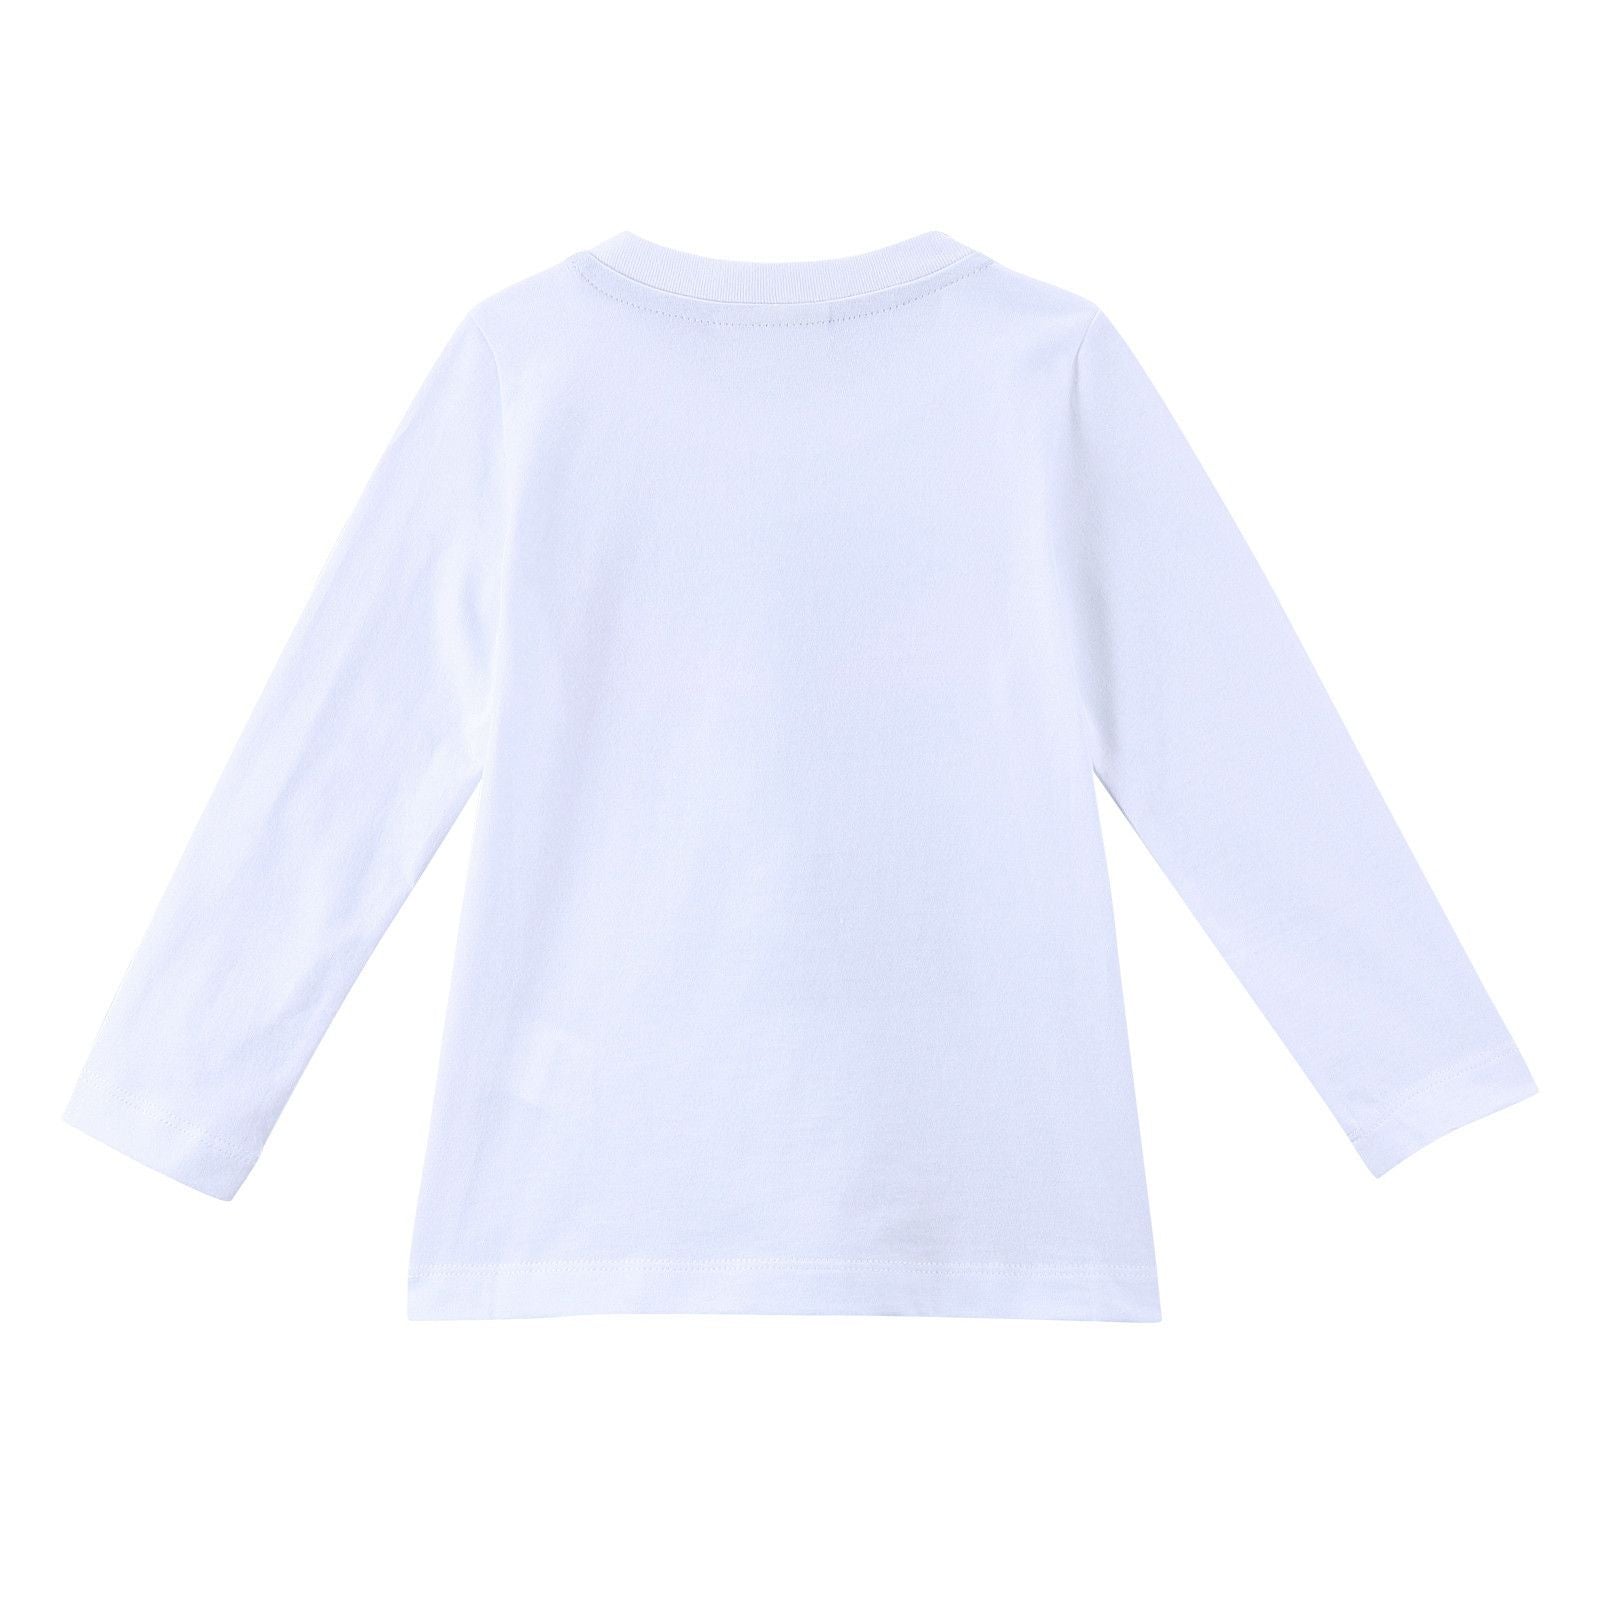 Girls White 'FF Monster' Printed Cotton T-Shirt - CÉMAROSE | Children's Fashion Store - 2